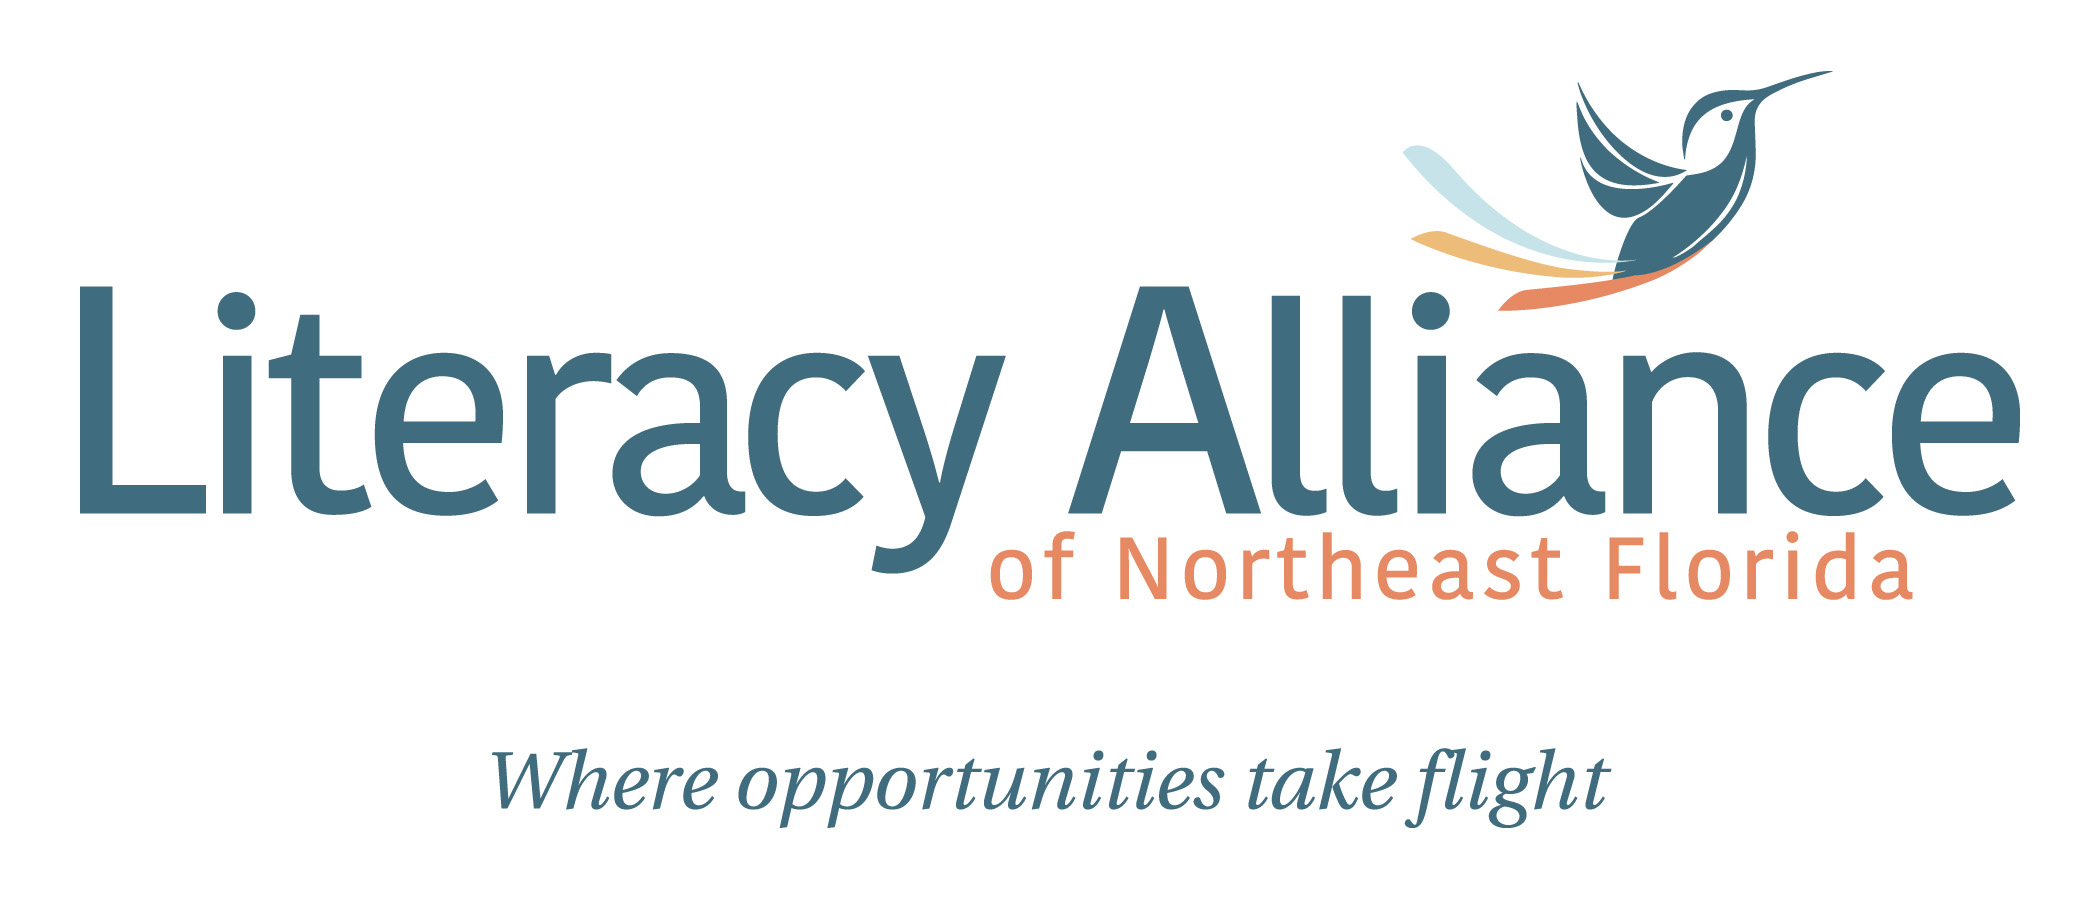 Literacy Alliance of Northeast Florida, Inc.